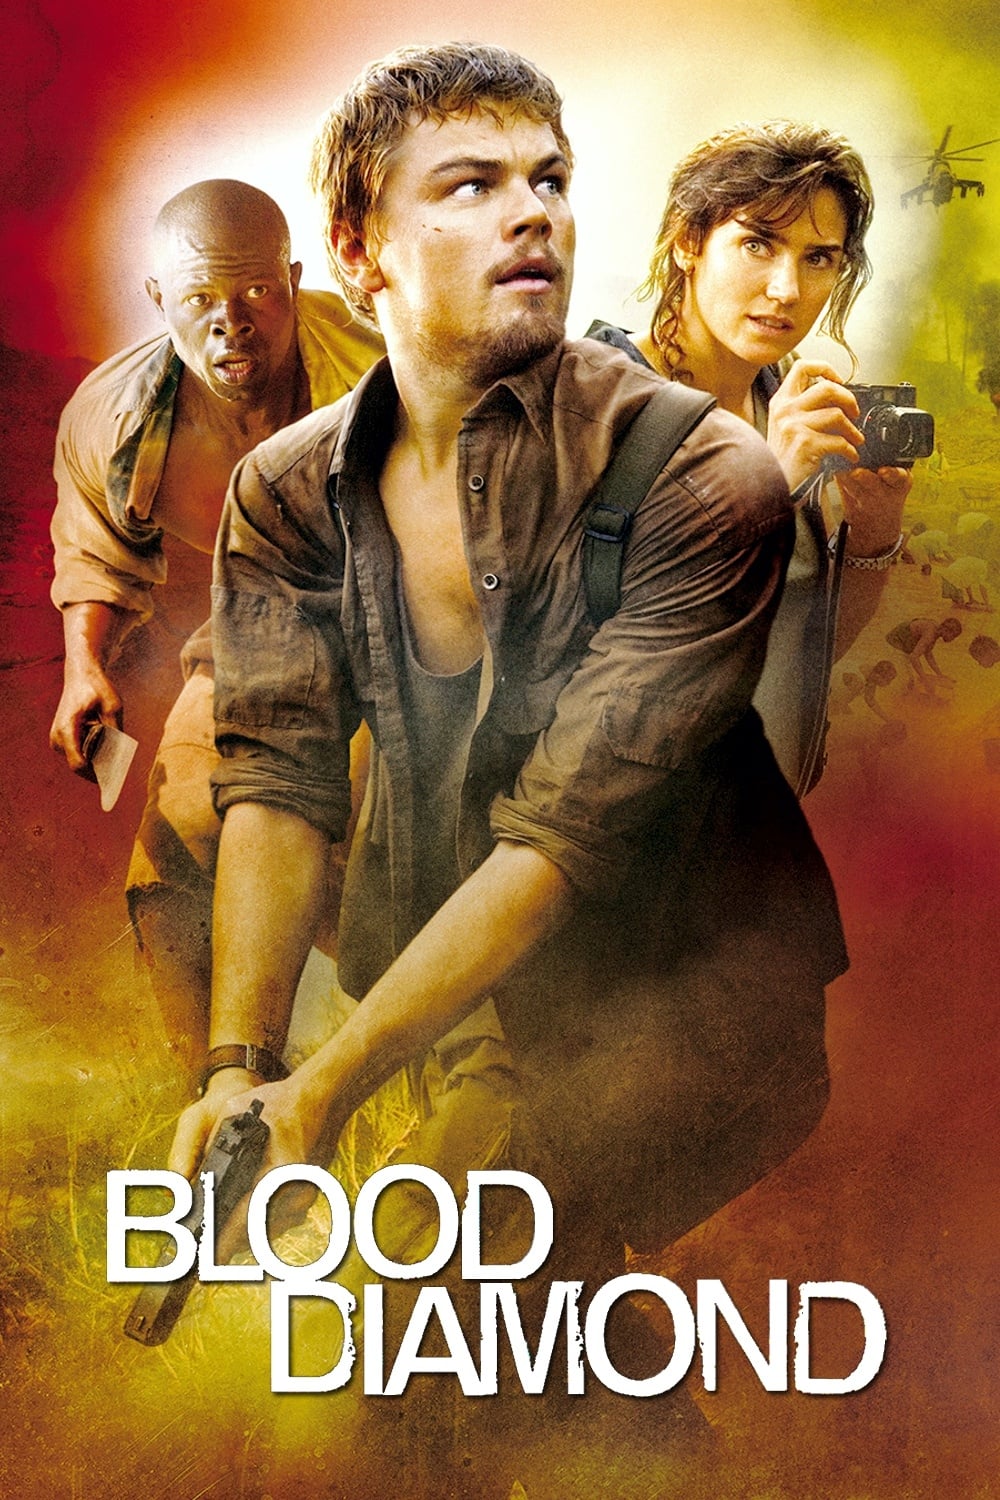 Plakat von "Blood Diamond"